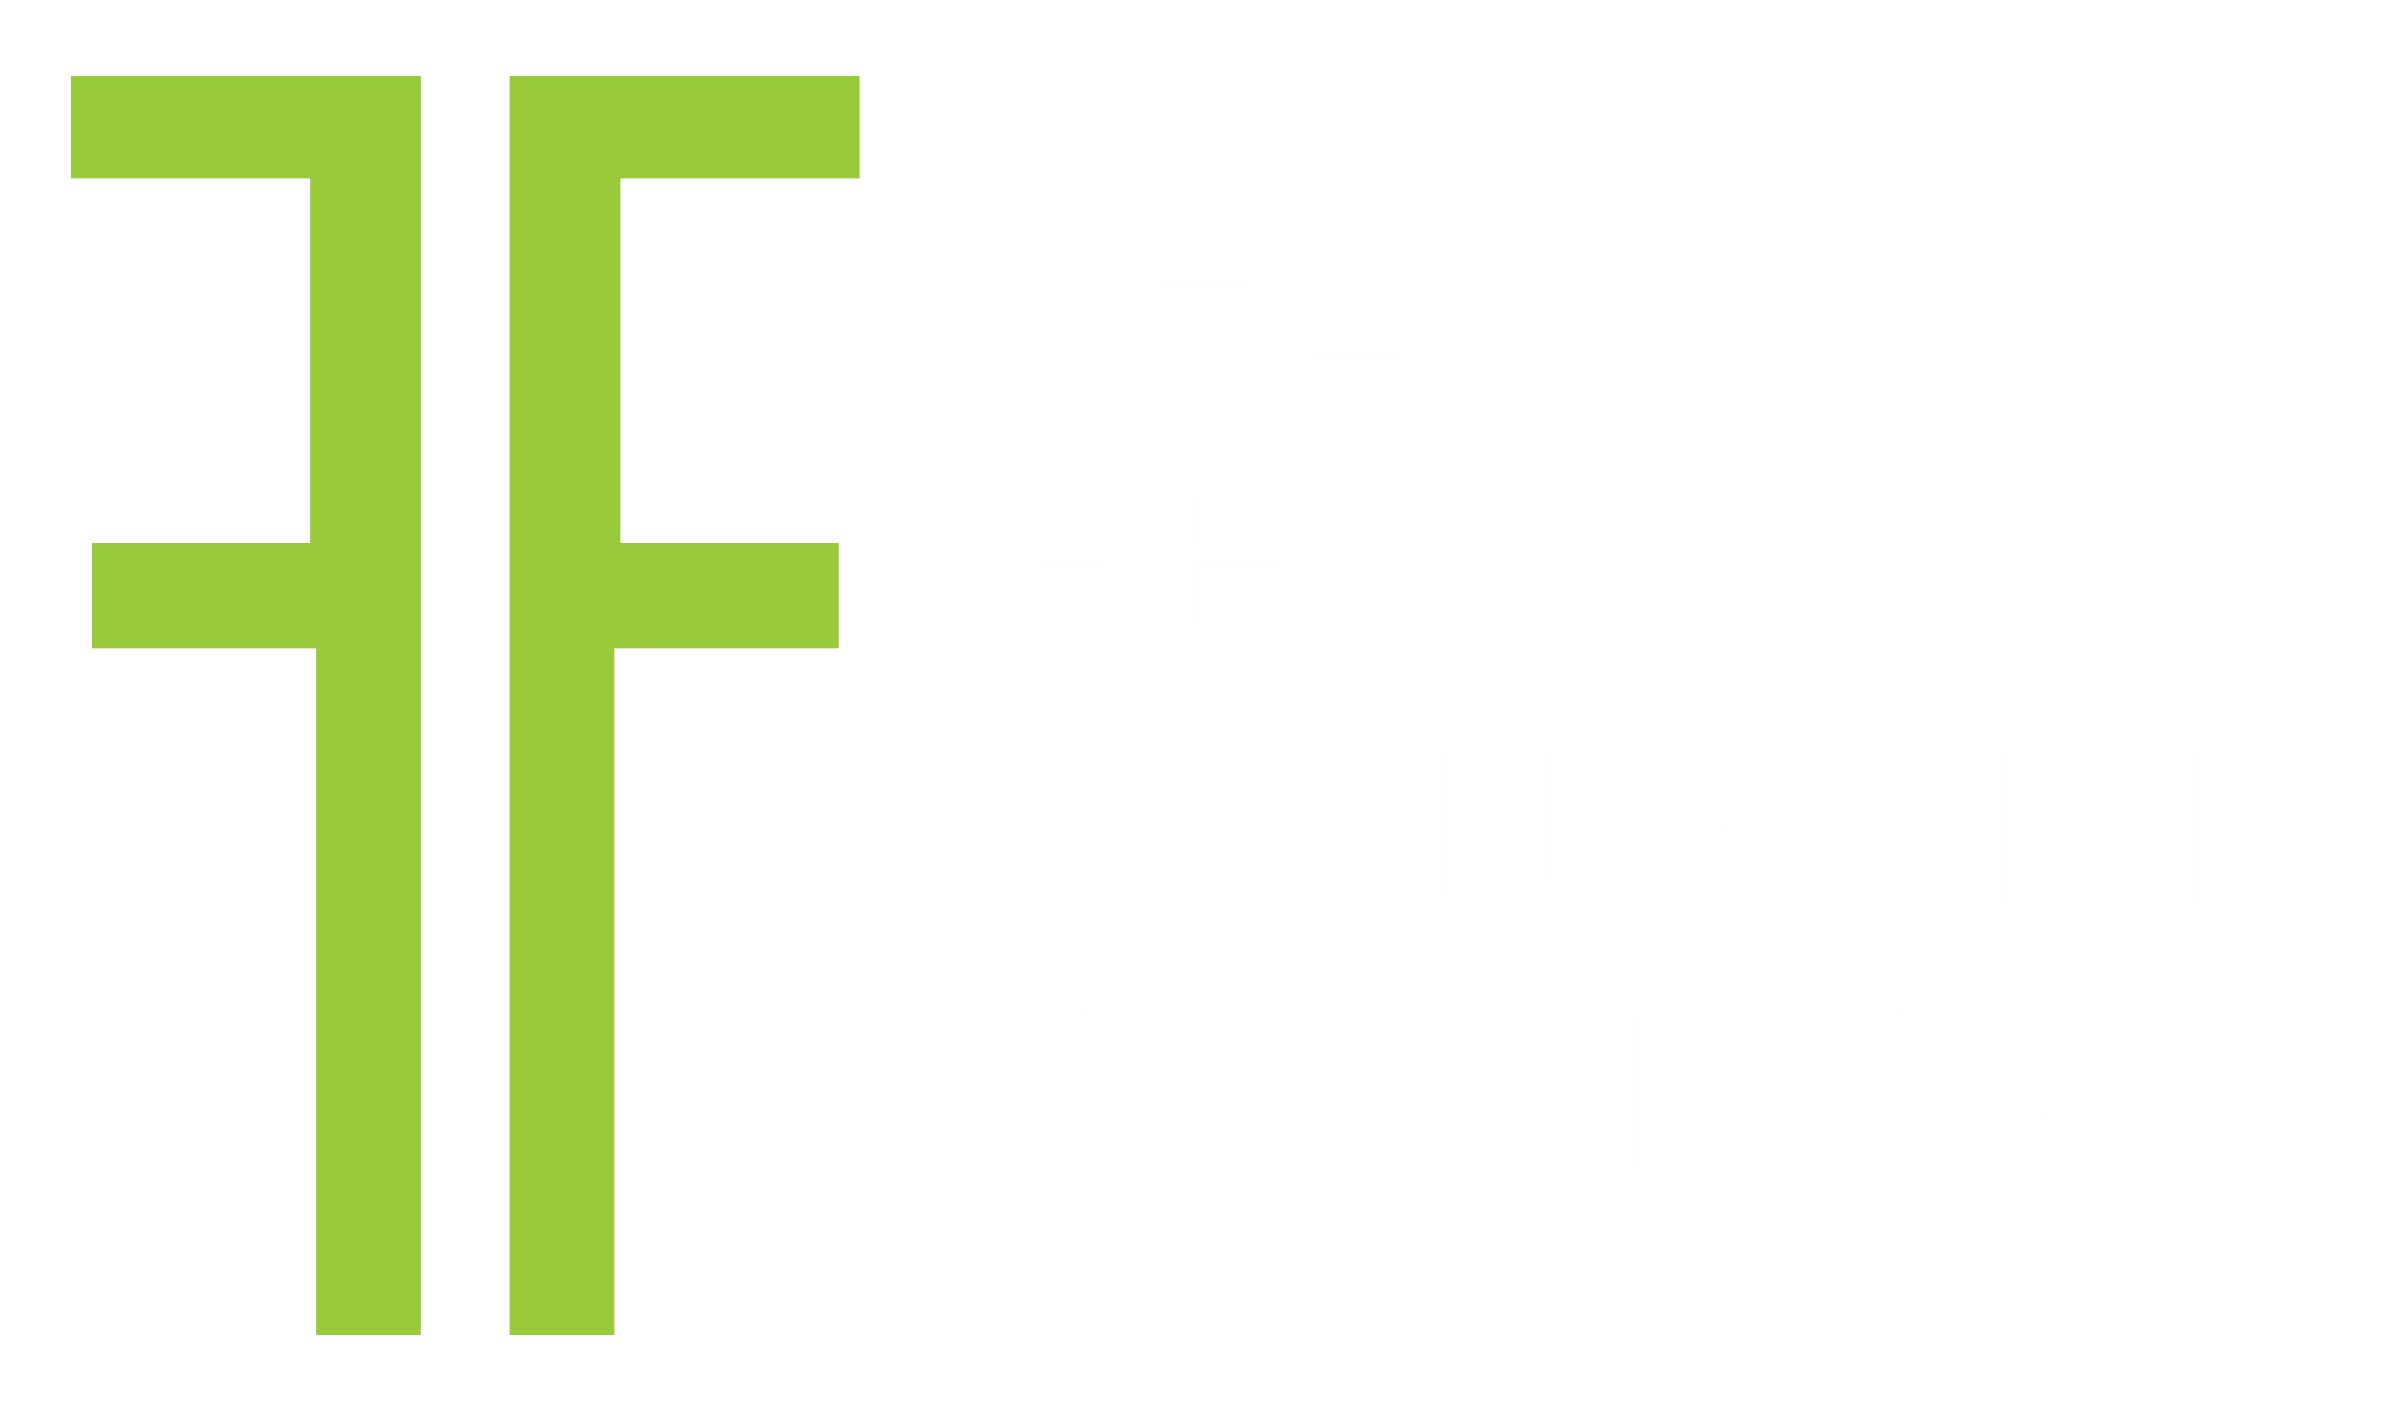 The Field Foundation of Illinois